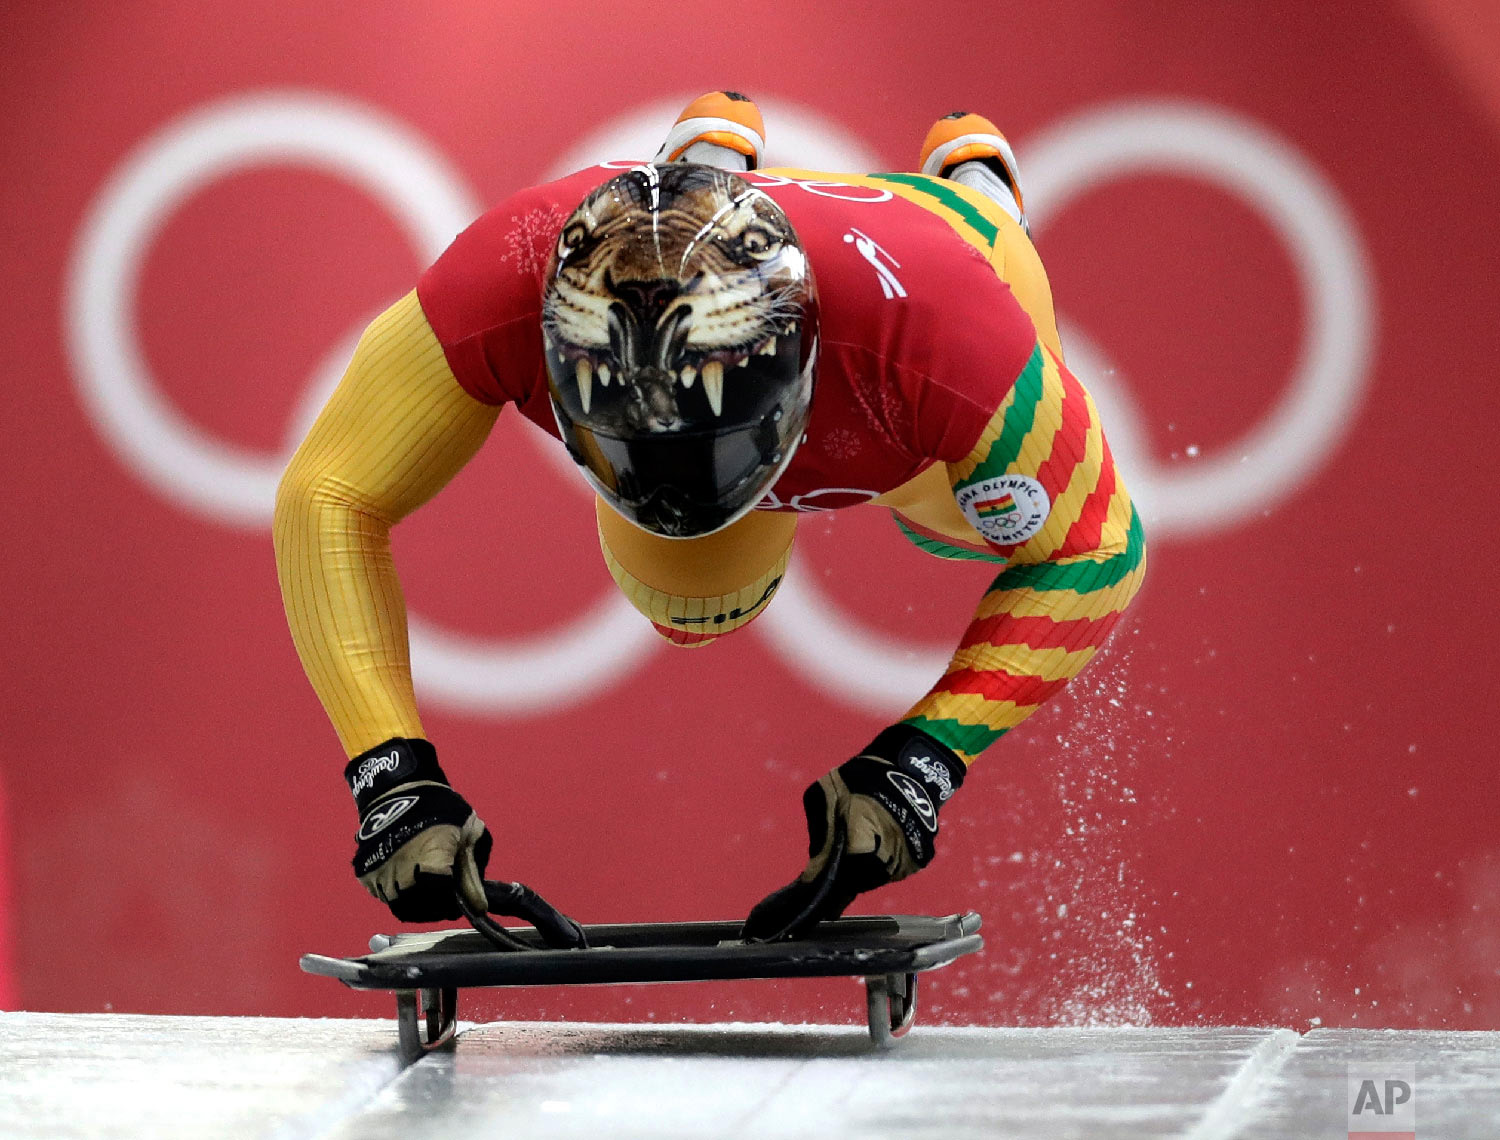  Akwasi Frimpong, of Ghana, starts his practice run during the men's skeleton training at the 2018 Winter Olympics in Pyeongchang, South Korea, Wednesday, Feb. 14, 2018. (AP Photo/Wong Maye-E) 